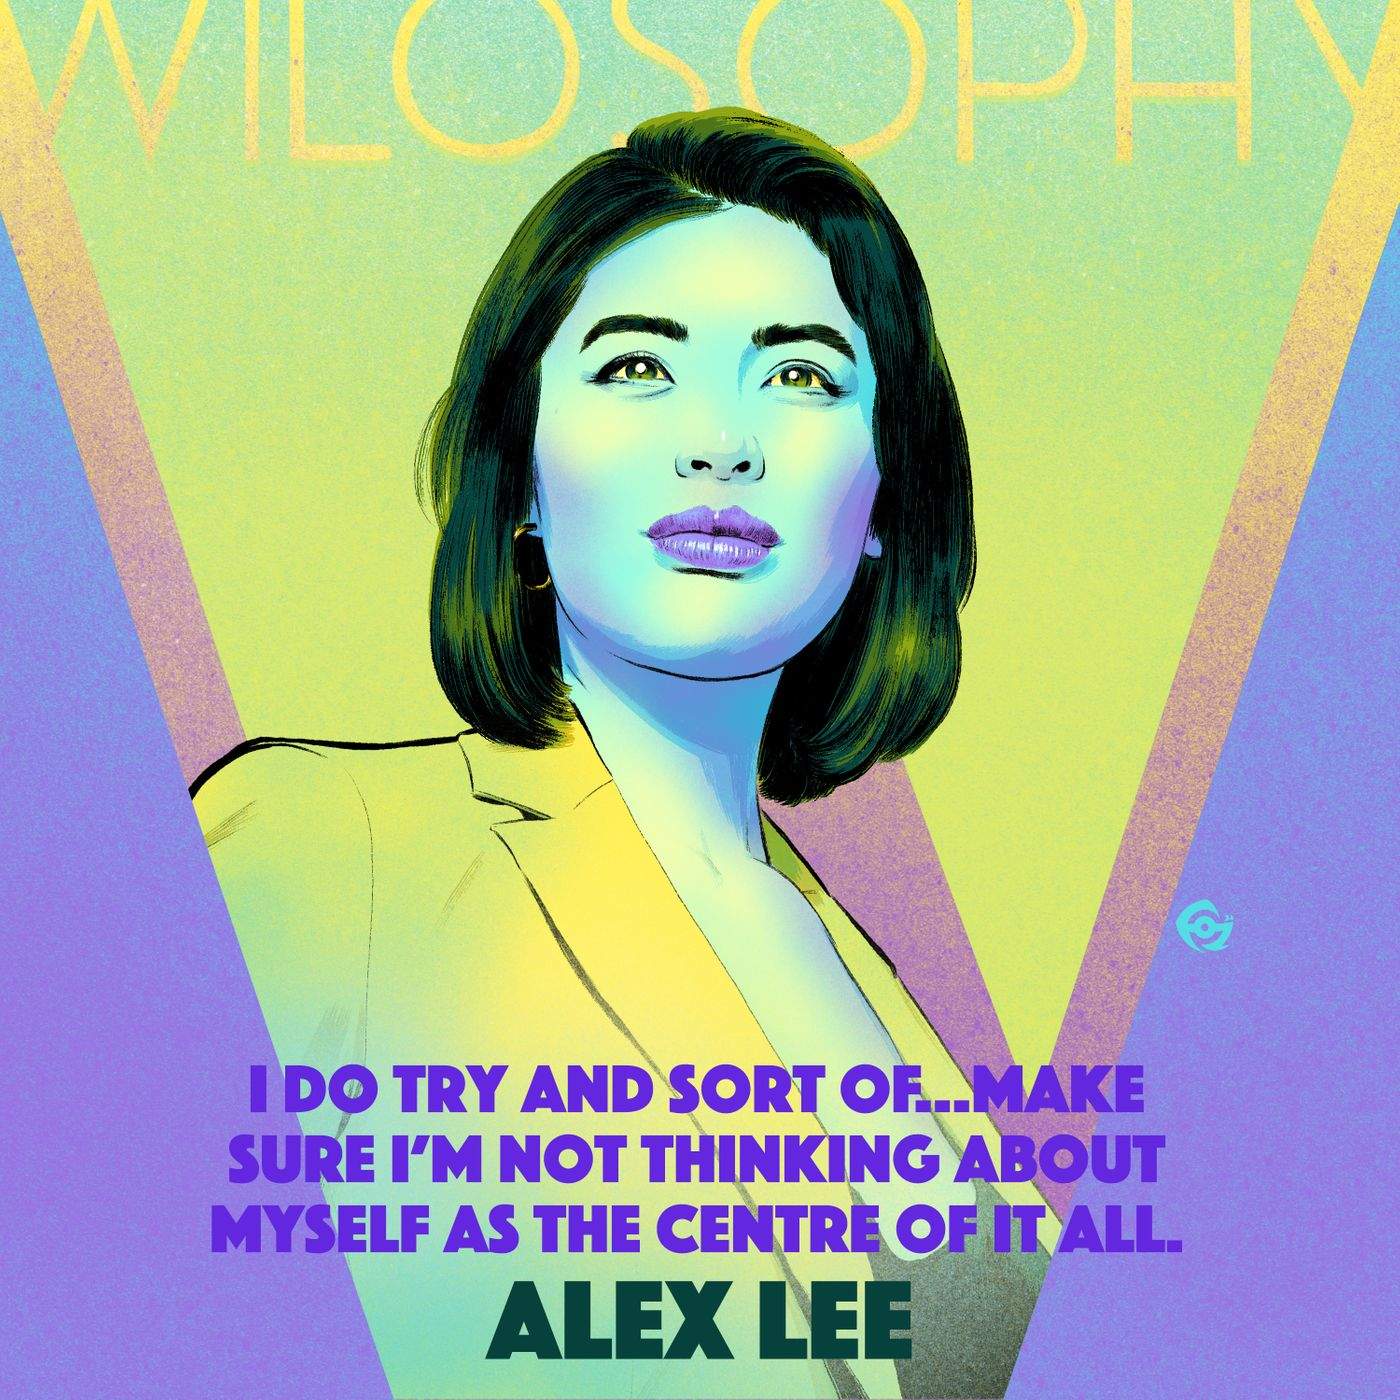 WILOSOPHY with Alex Lee